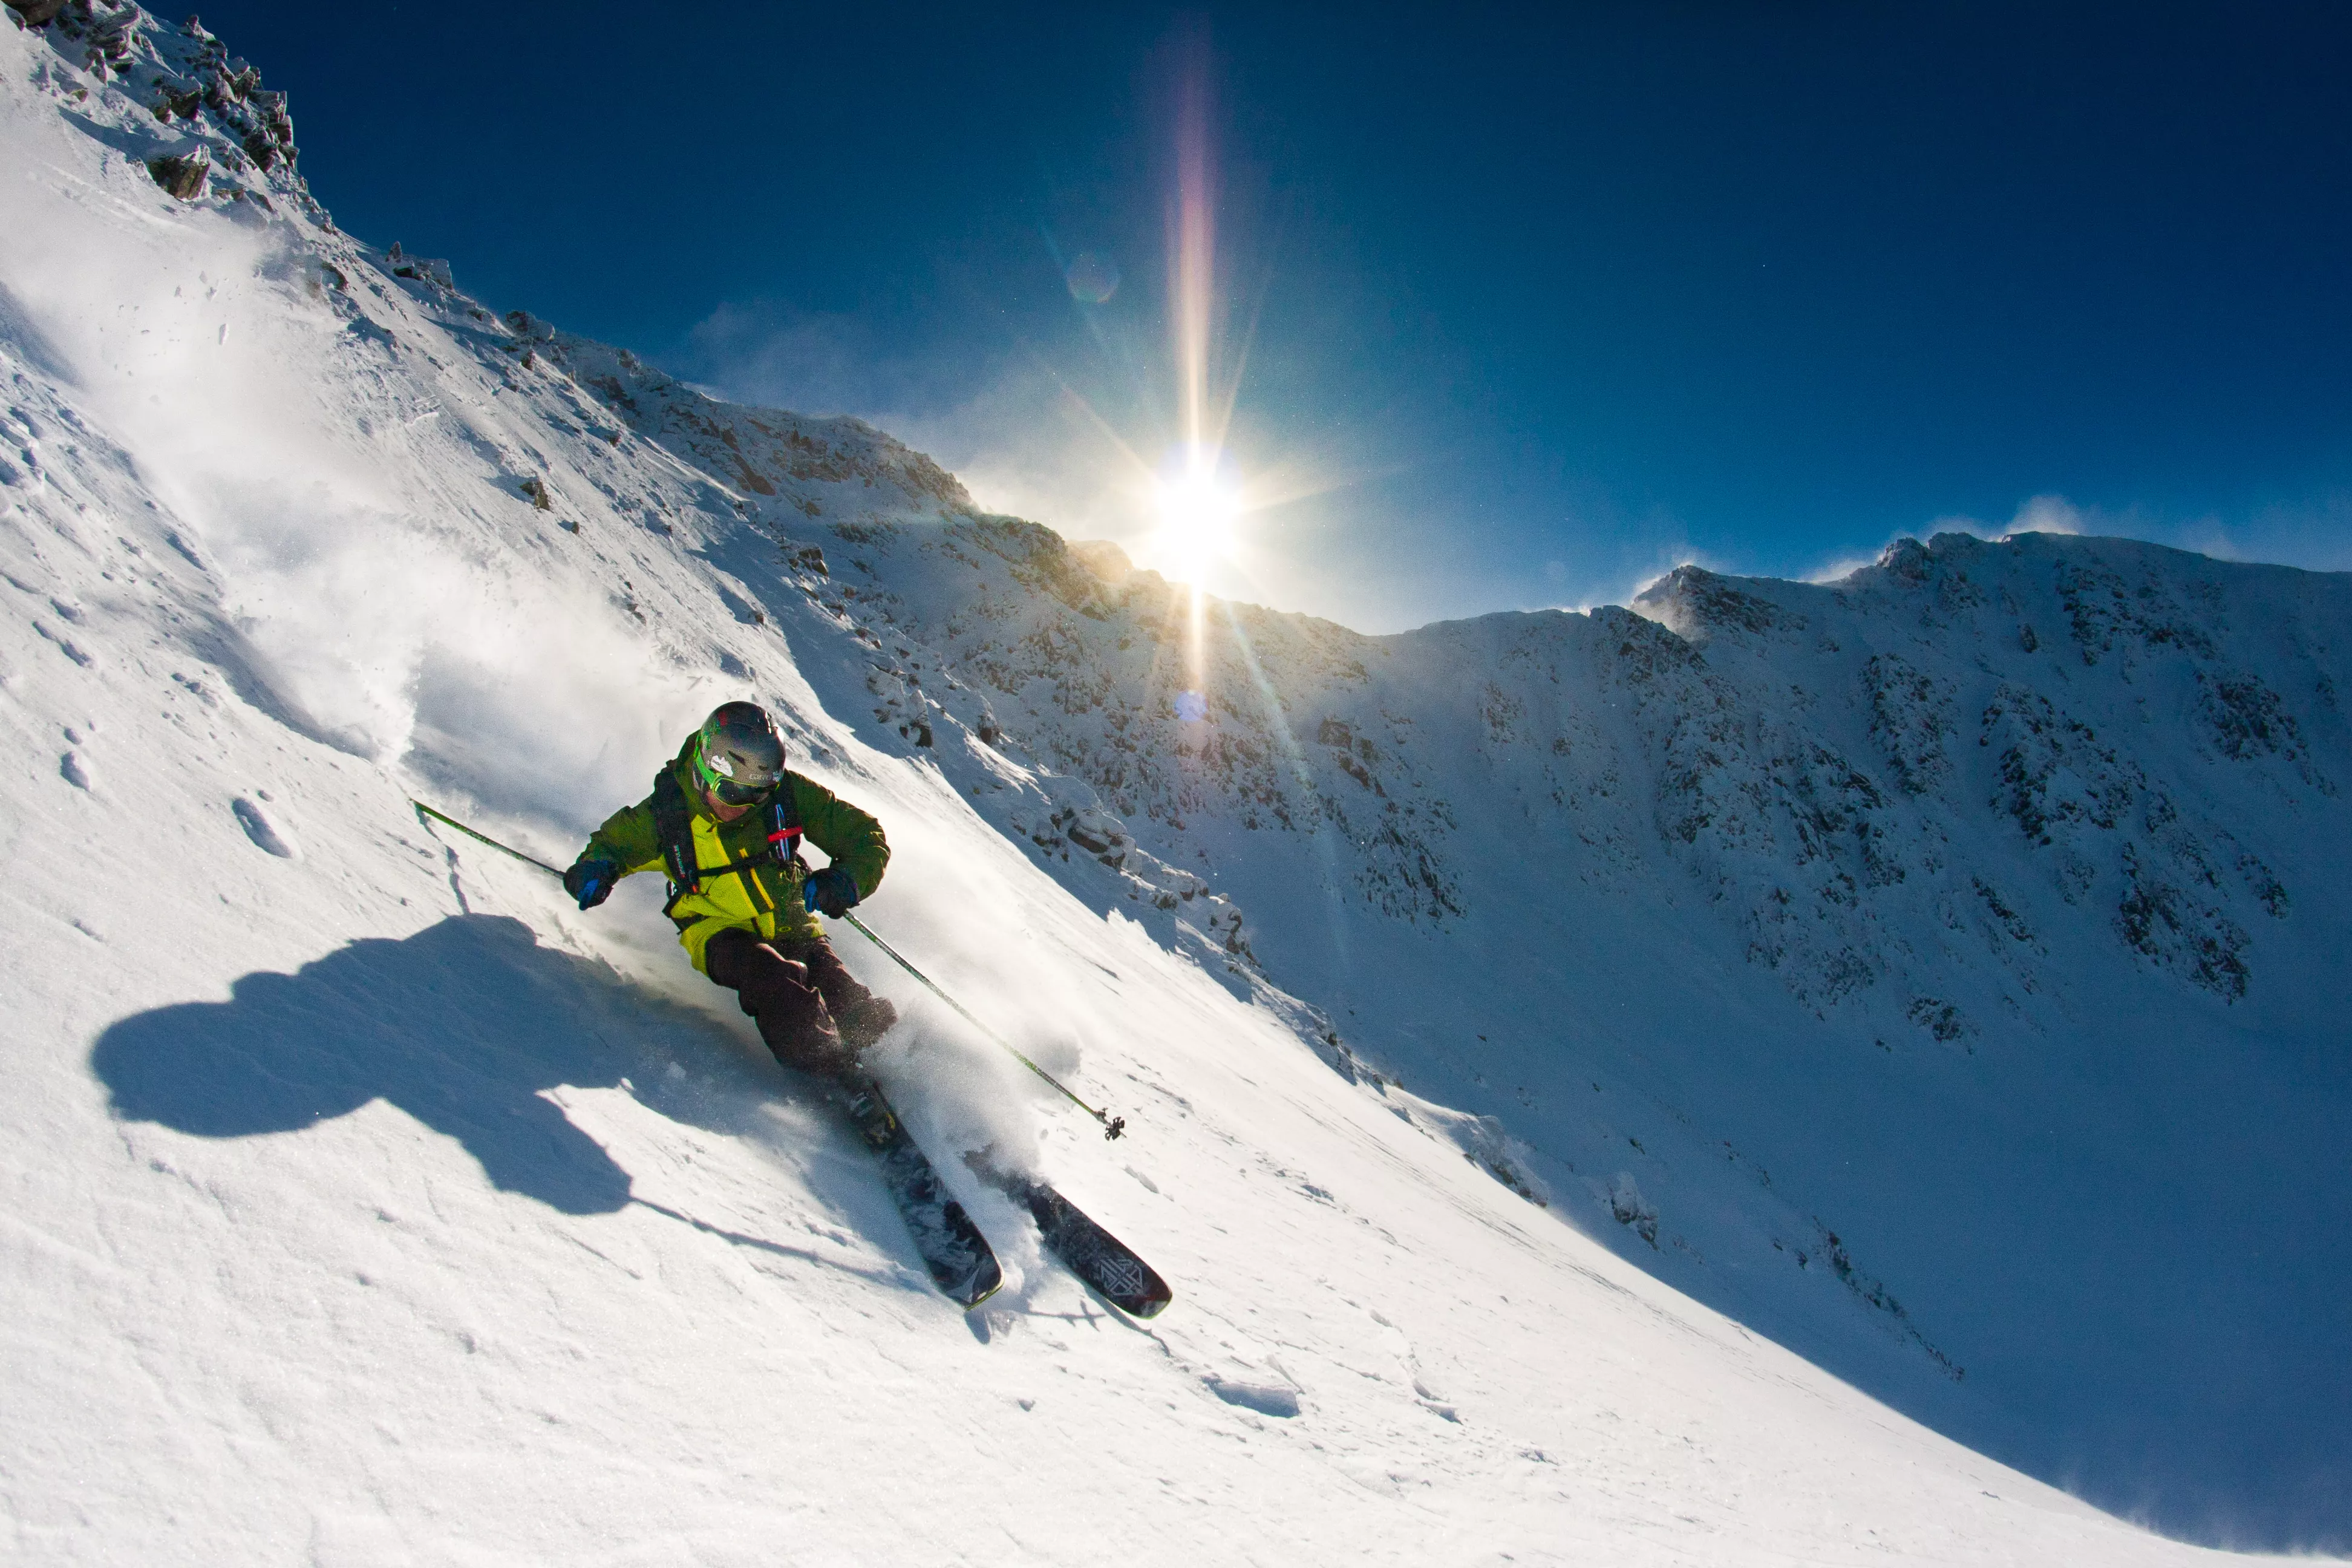 Lyziarska Ski Tatry Motion in Slovakia, Europe | Snowboarding,Skiing - Rated 0.8